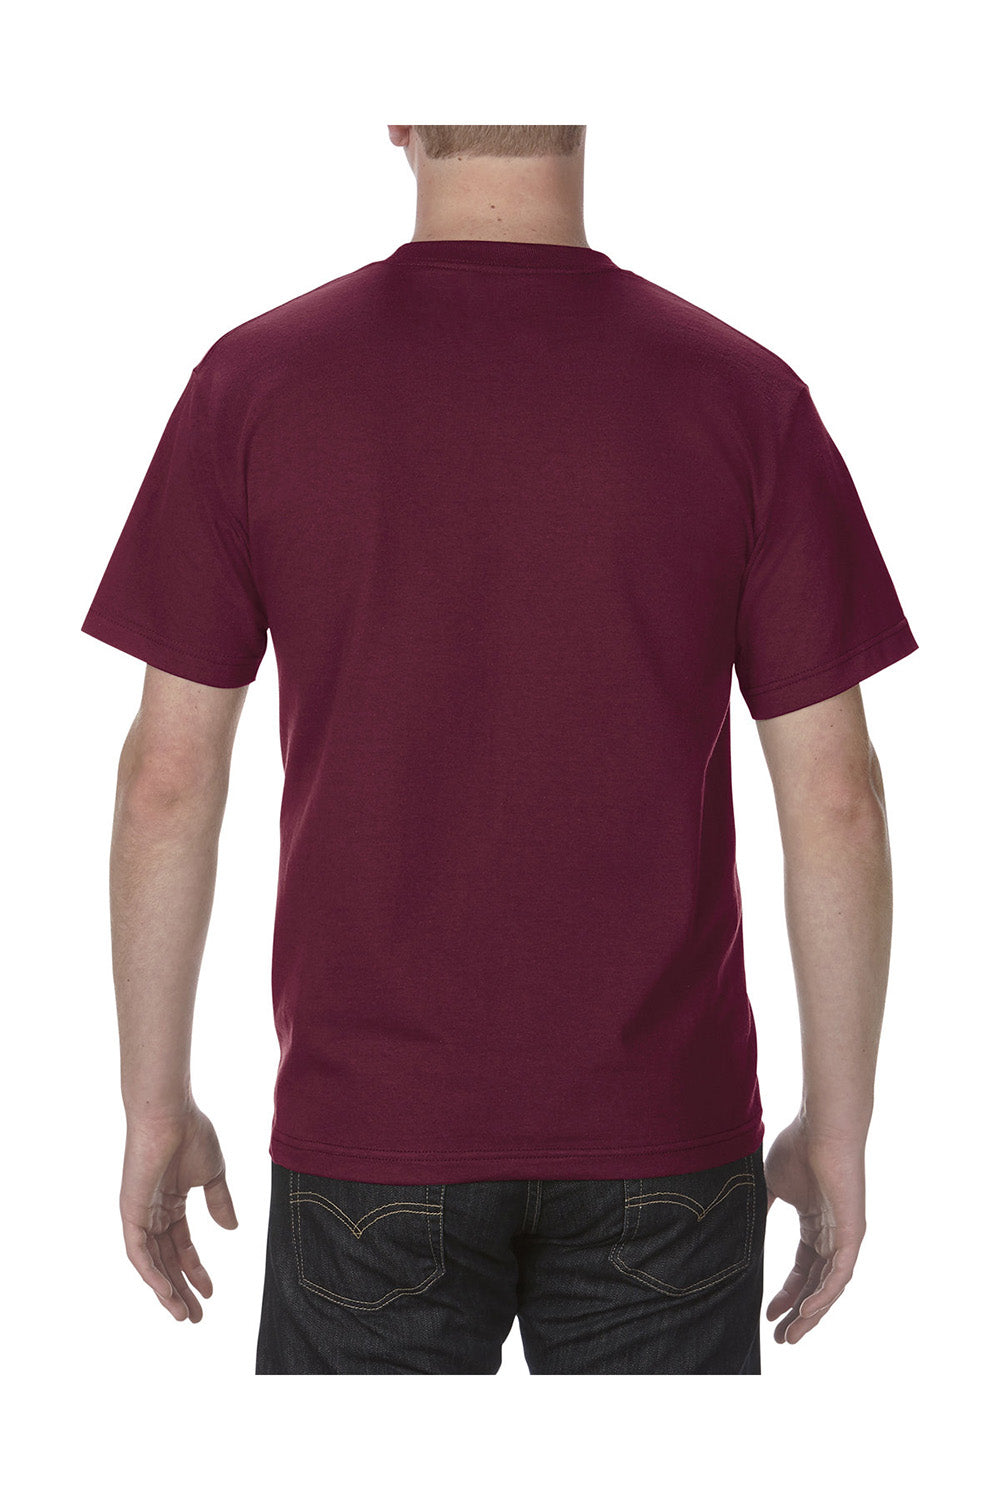 American Apparel 1301/AL1301 Mens Short Sleeve Crewneck T-Shirt Burgundy Model Back